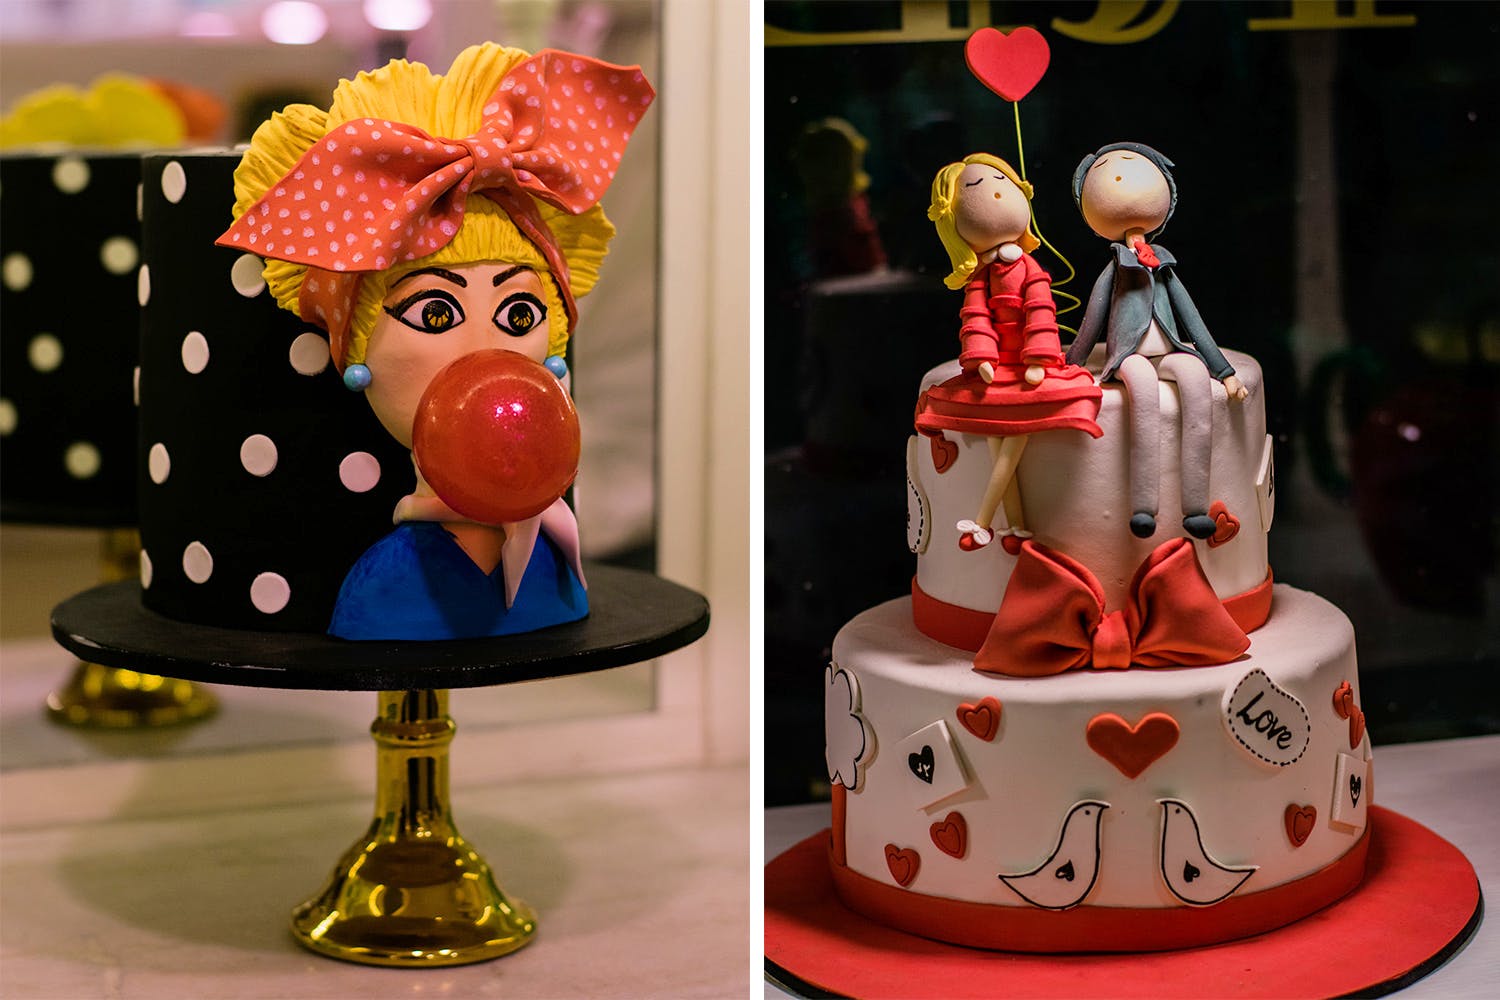 Figurine,Cake decorating,Cake,Pasteles,Toy,Sugar paste,Dessert,Baked goods,Souvenir,Performing arts